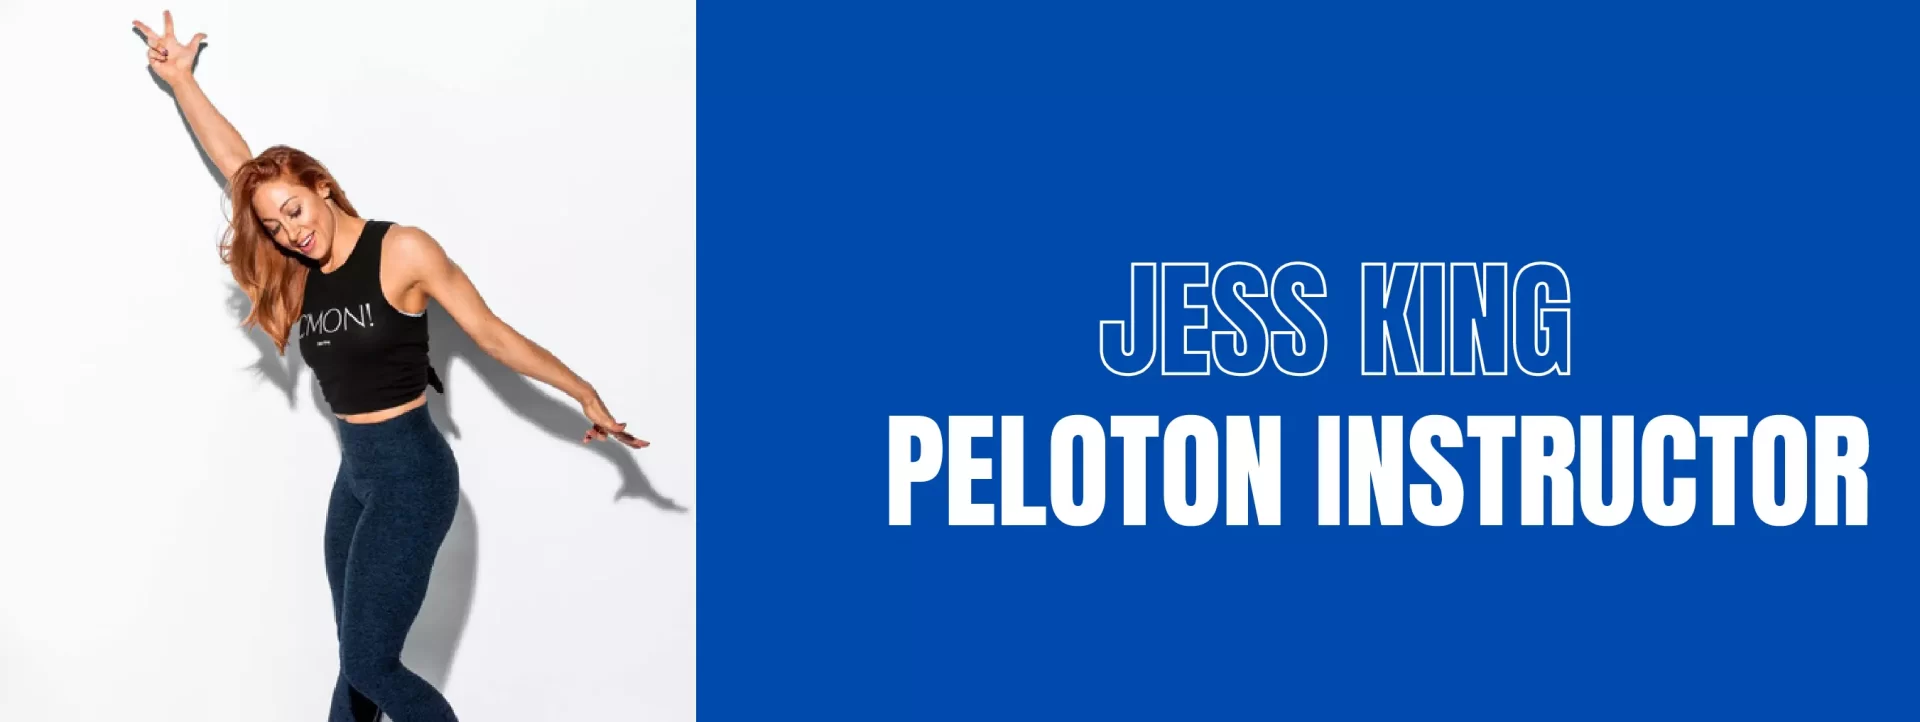 Jess King Peloton Instructor